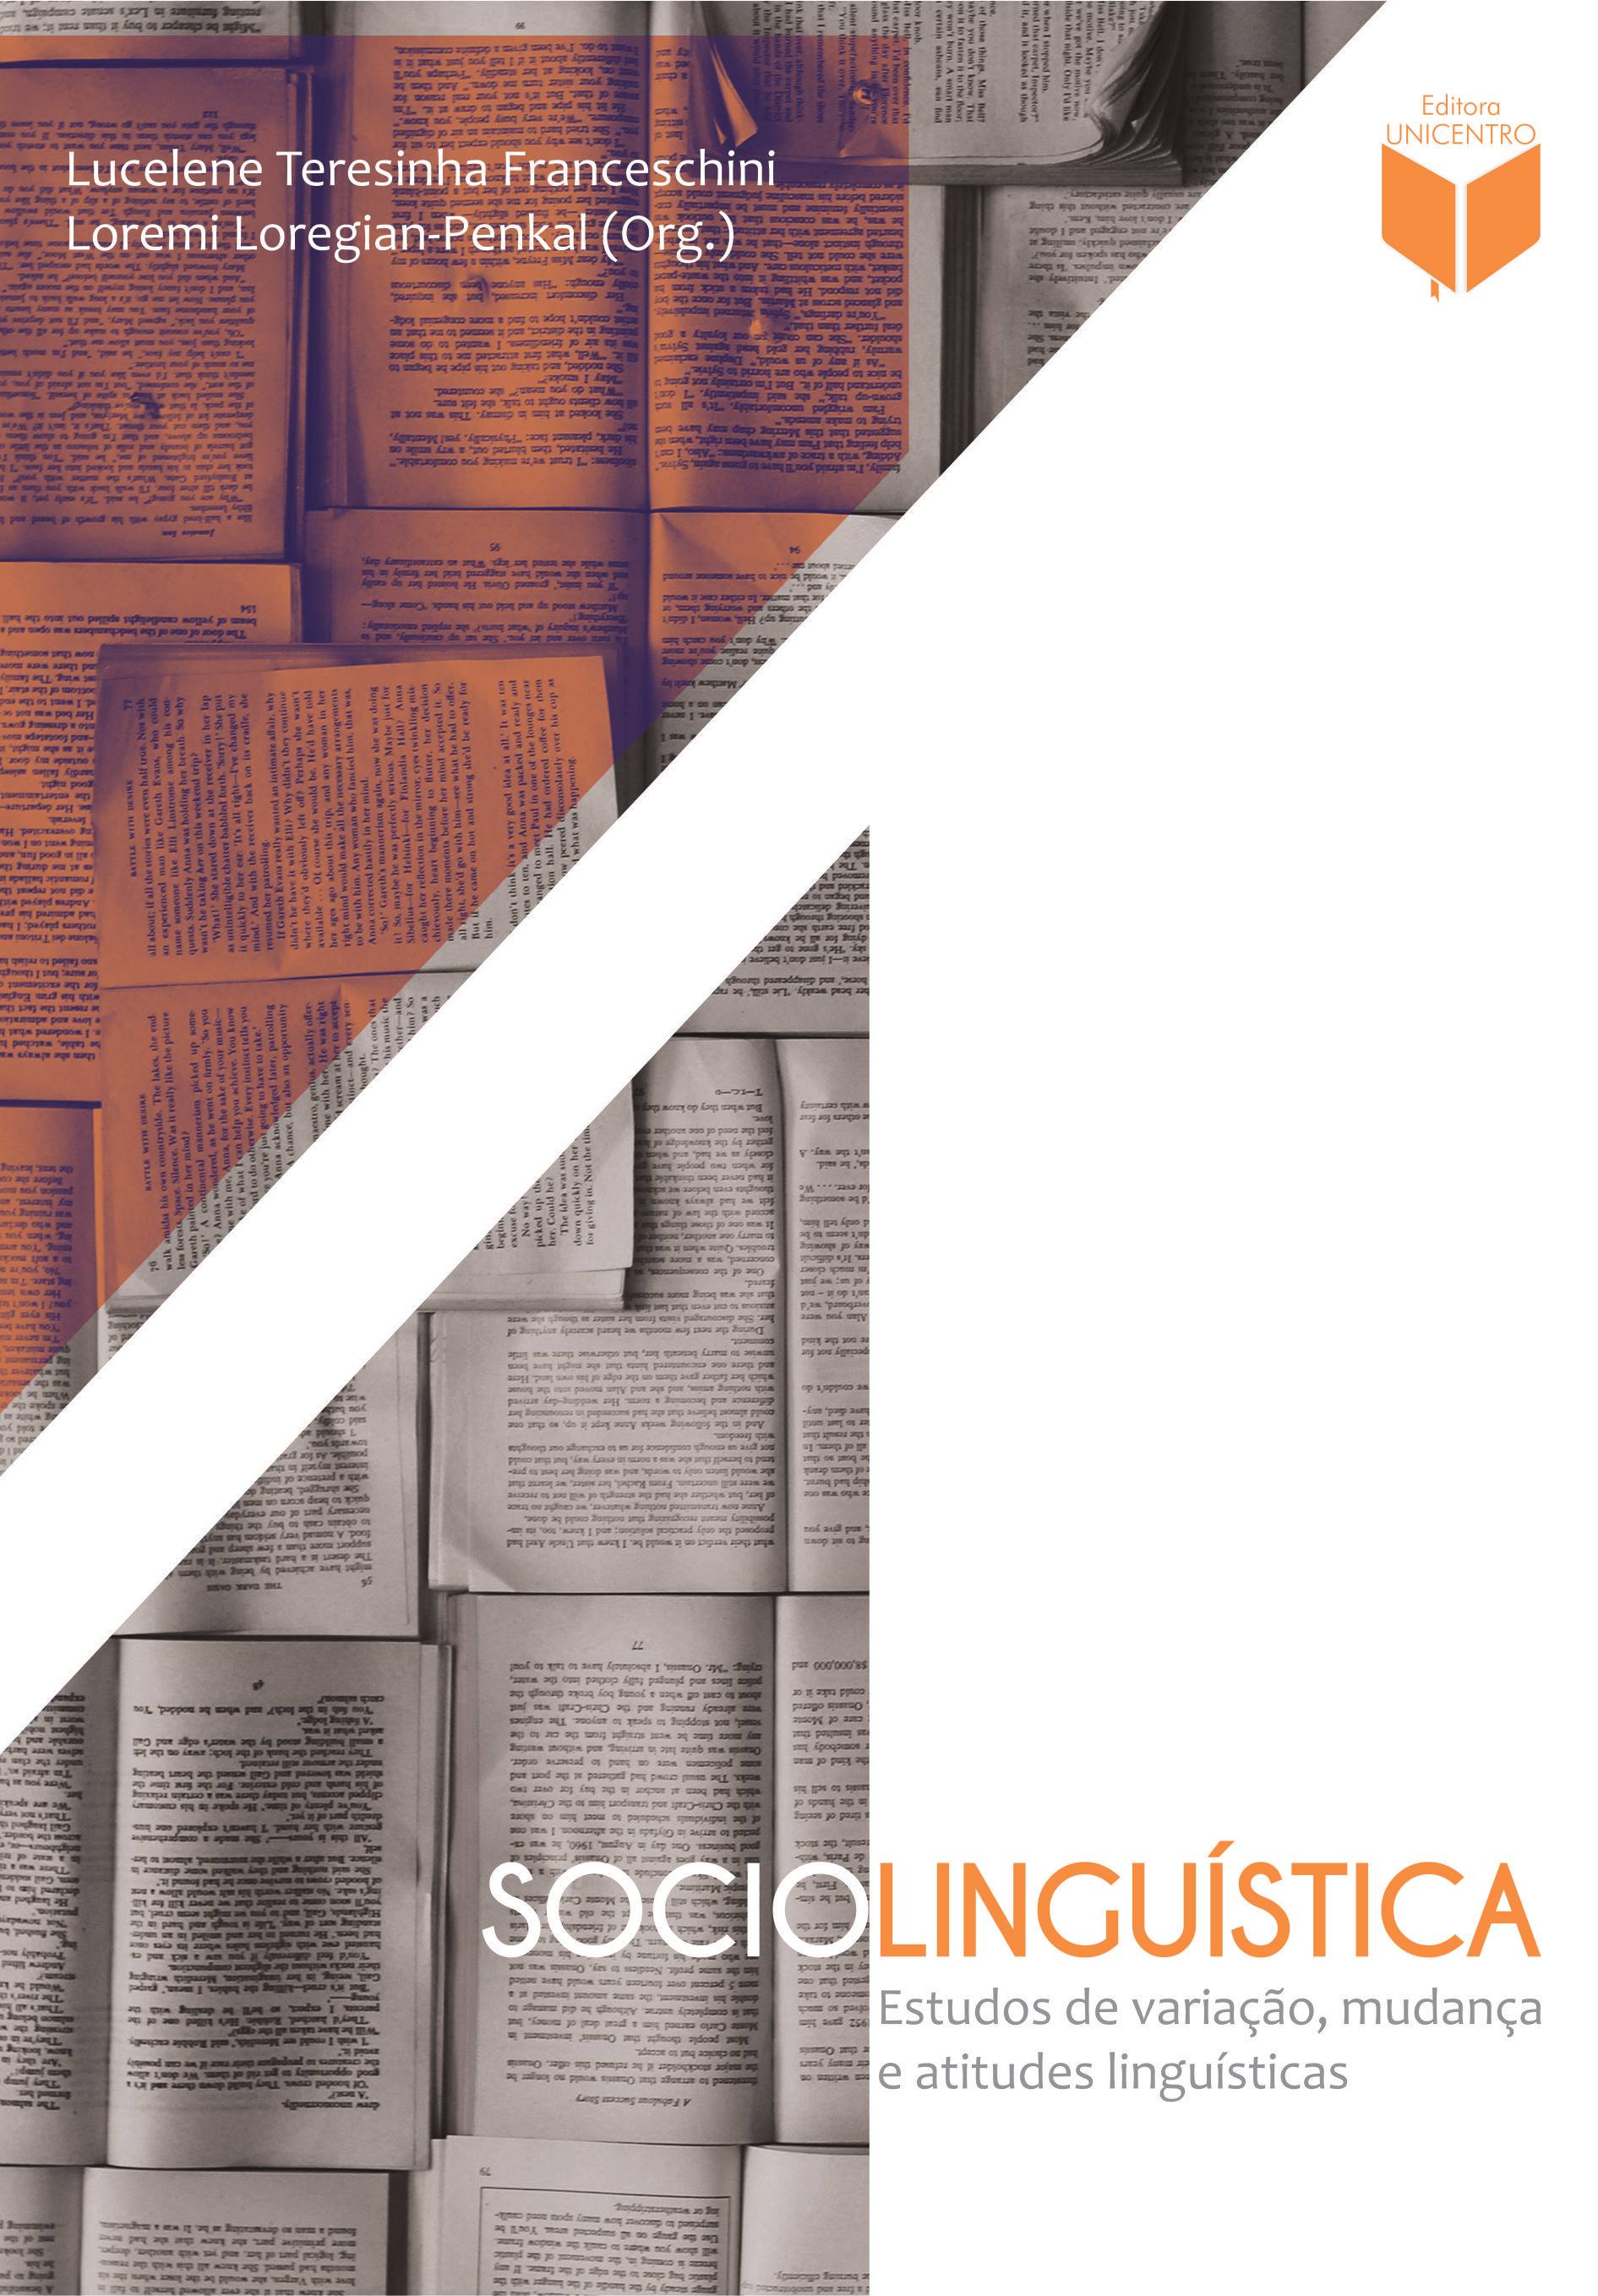 Sociolingustica: estudos de variao, mudana e atitudes lingusticas